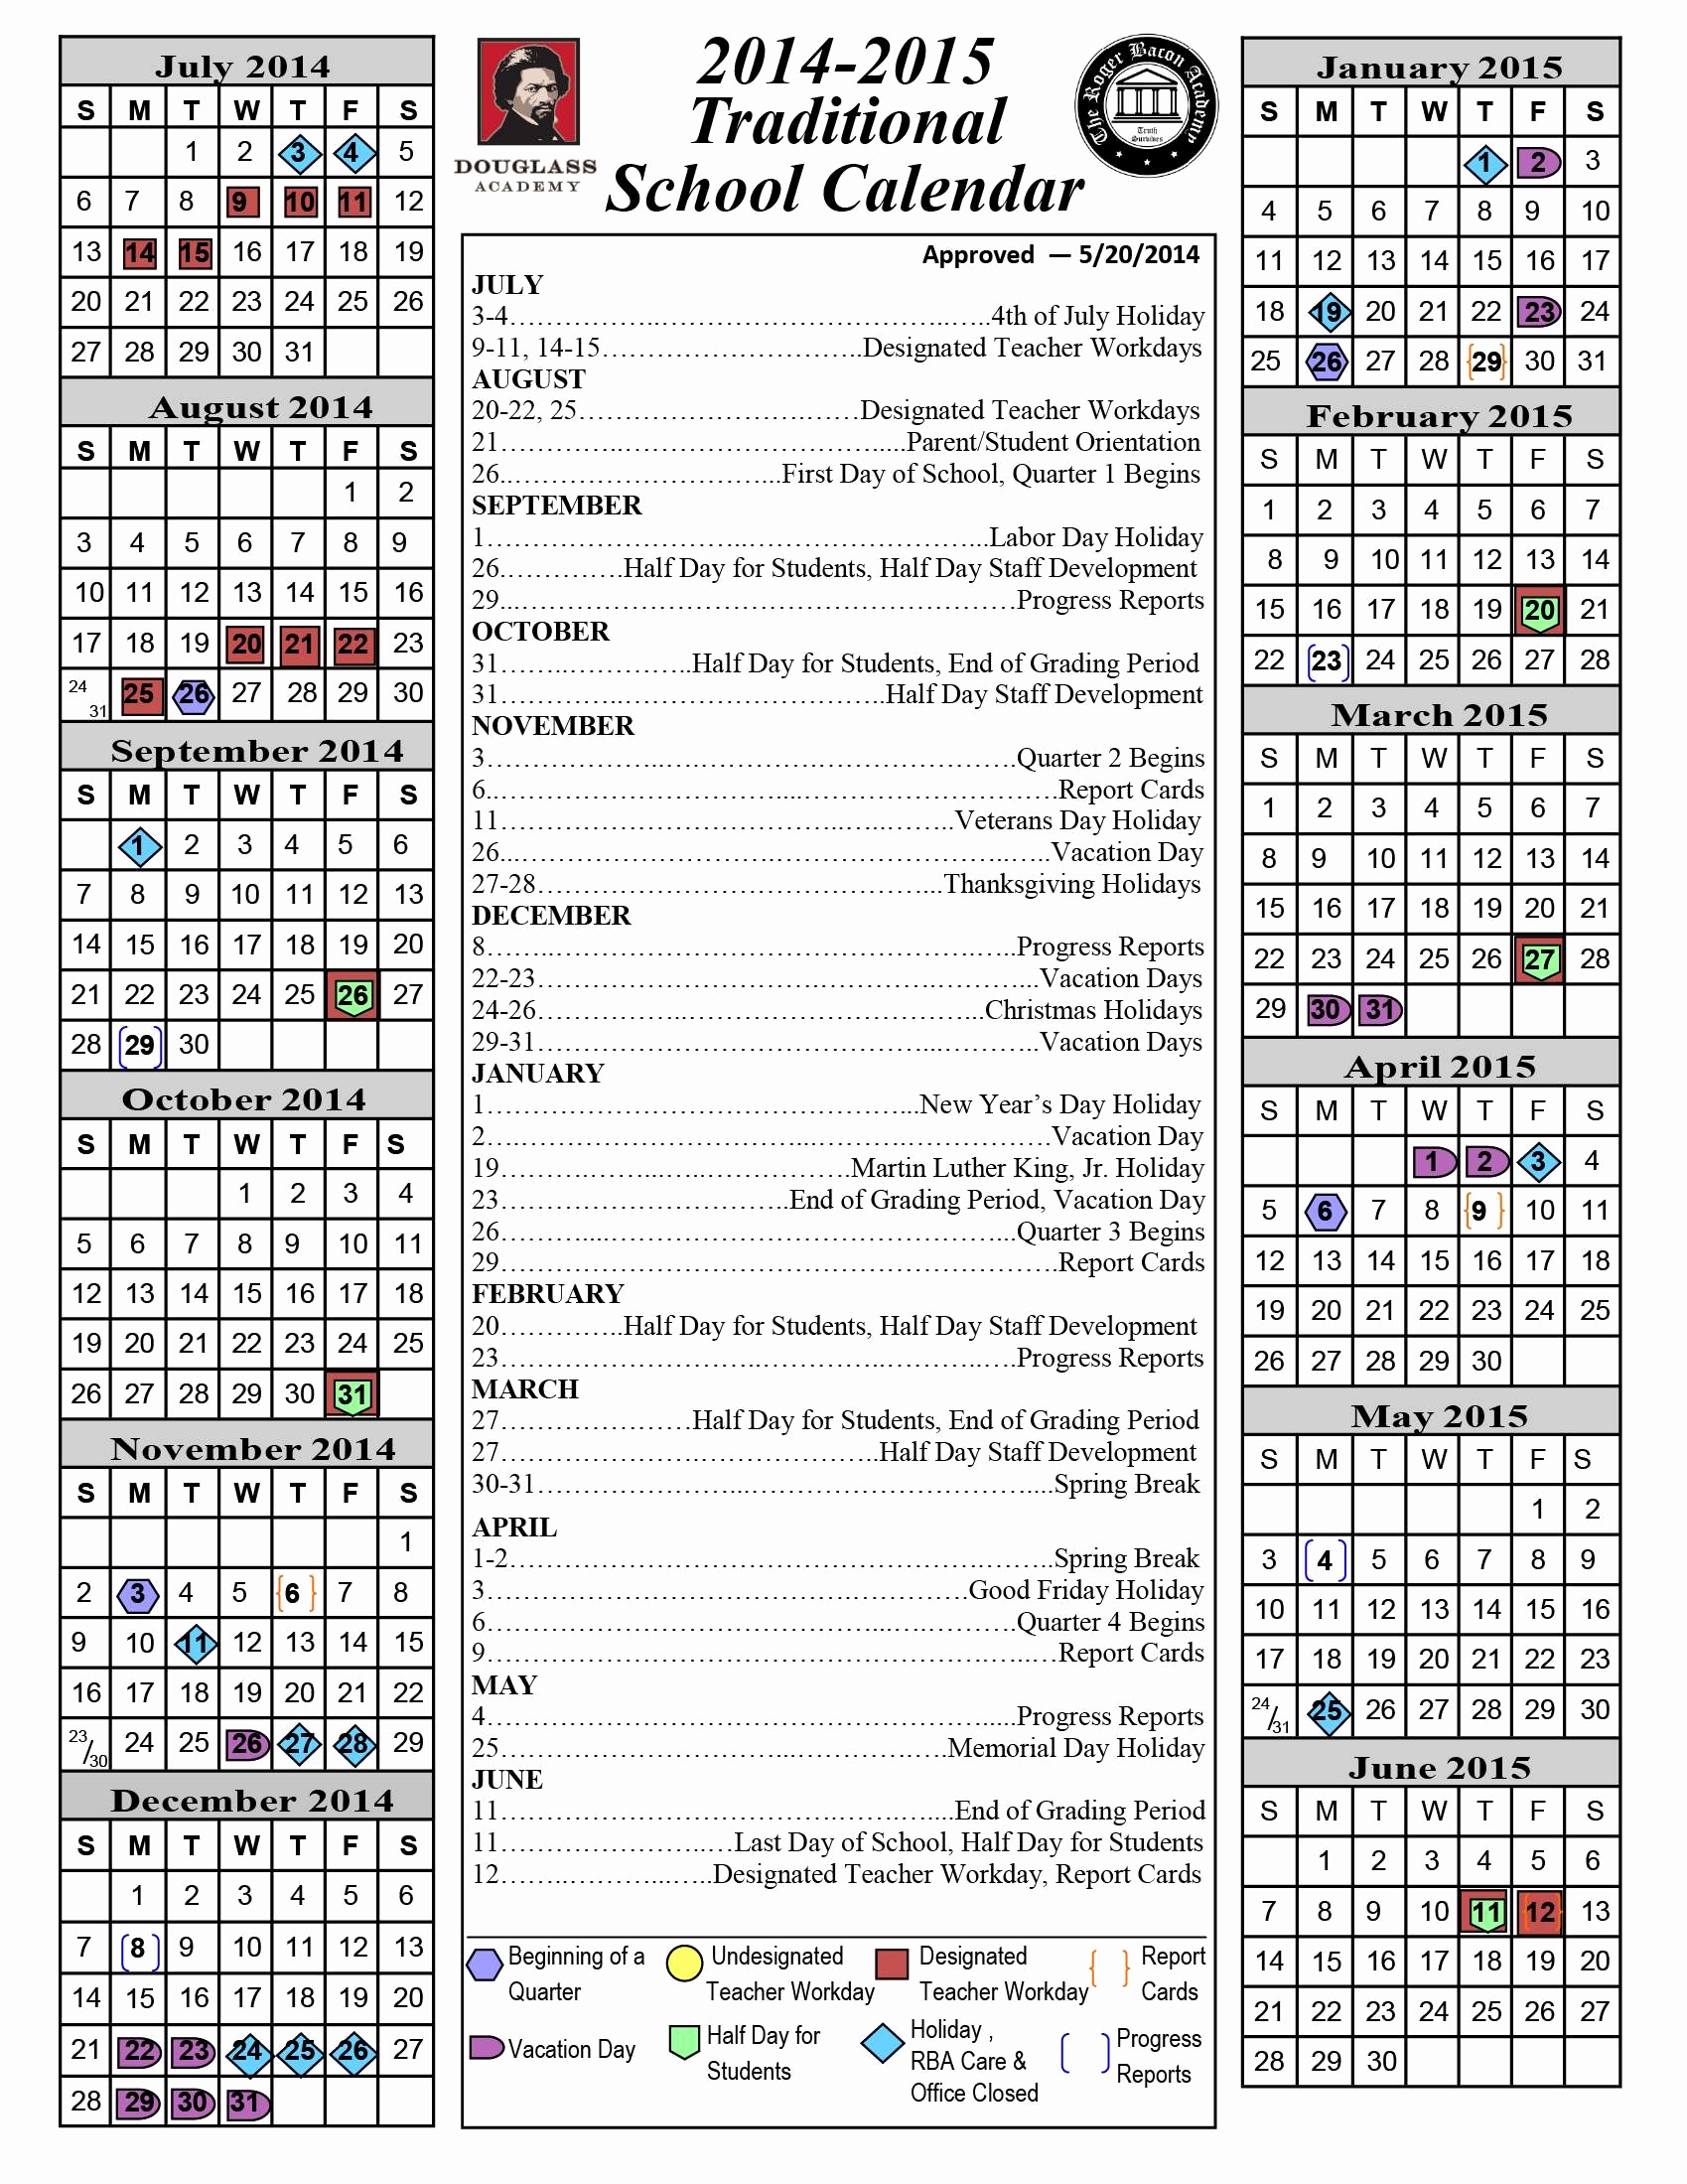 Howard University Calendar Qualads